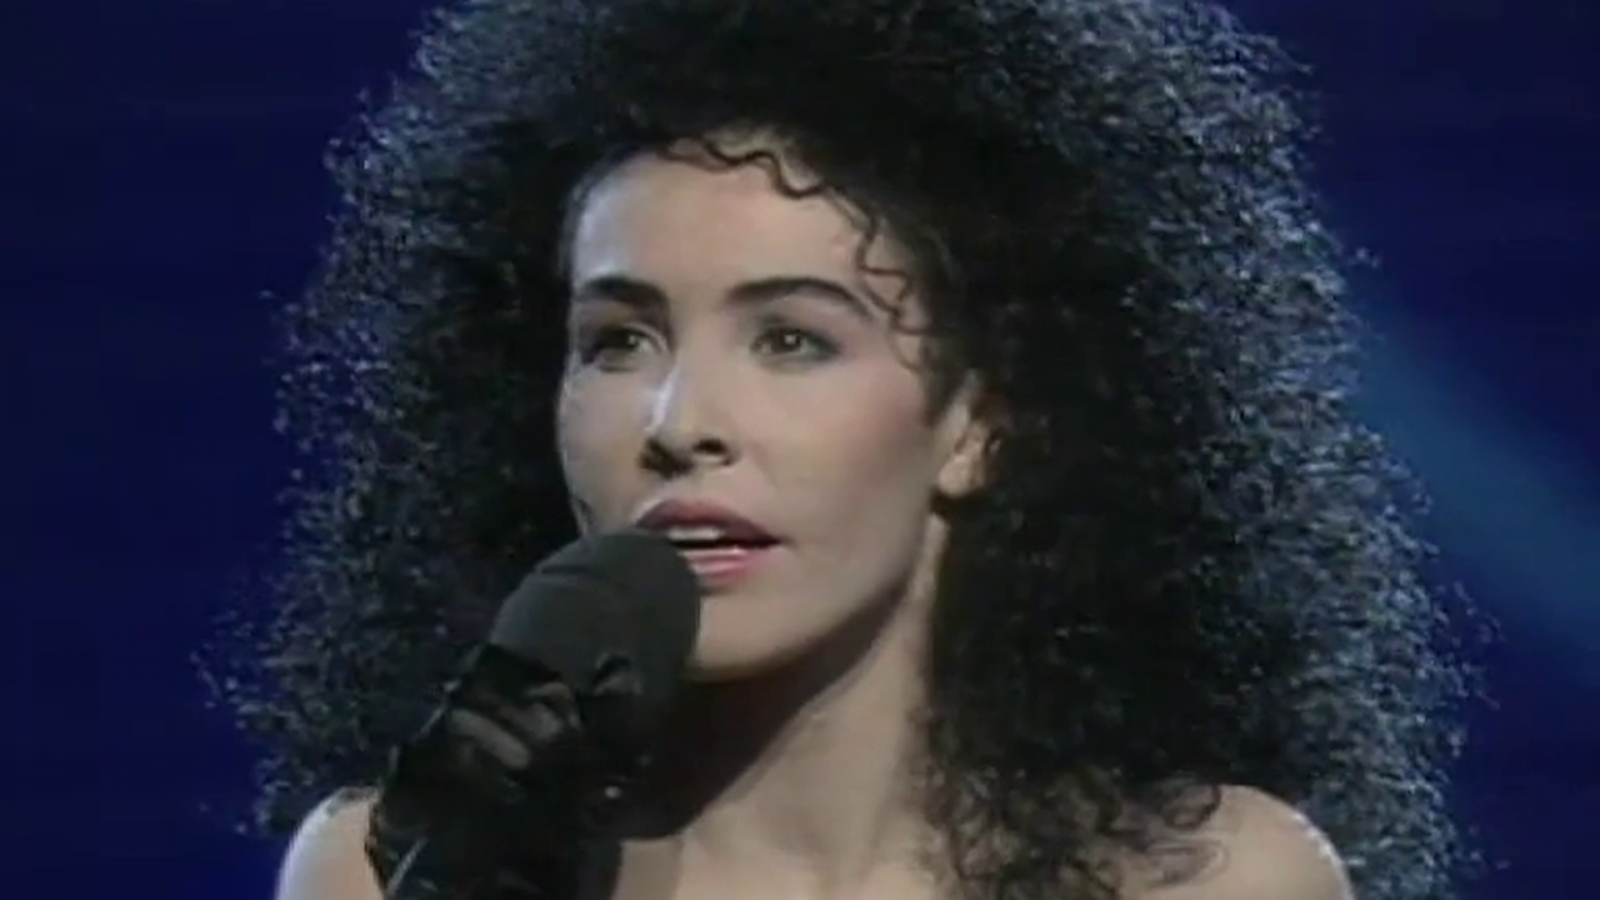 Eurovisión - Nina interpreta "Nacida para amar" el Festival de Eurovisión de 1989